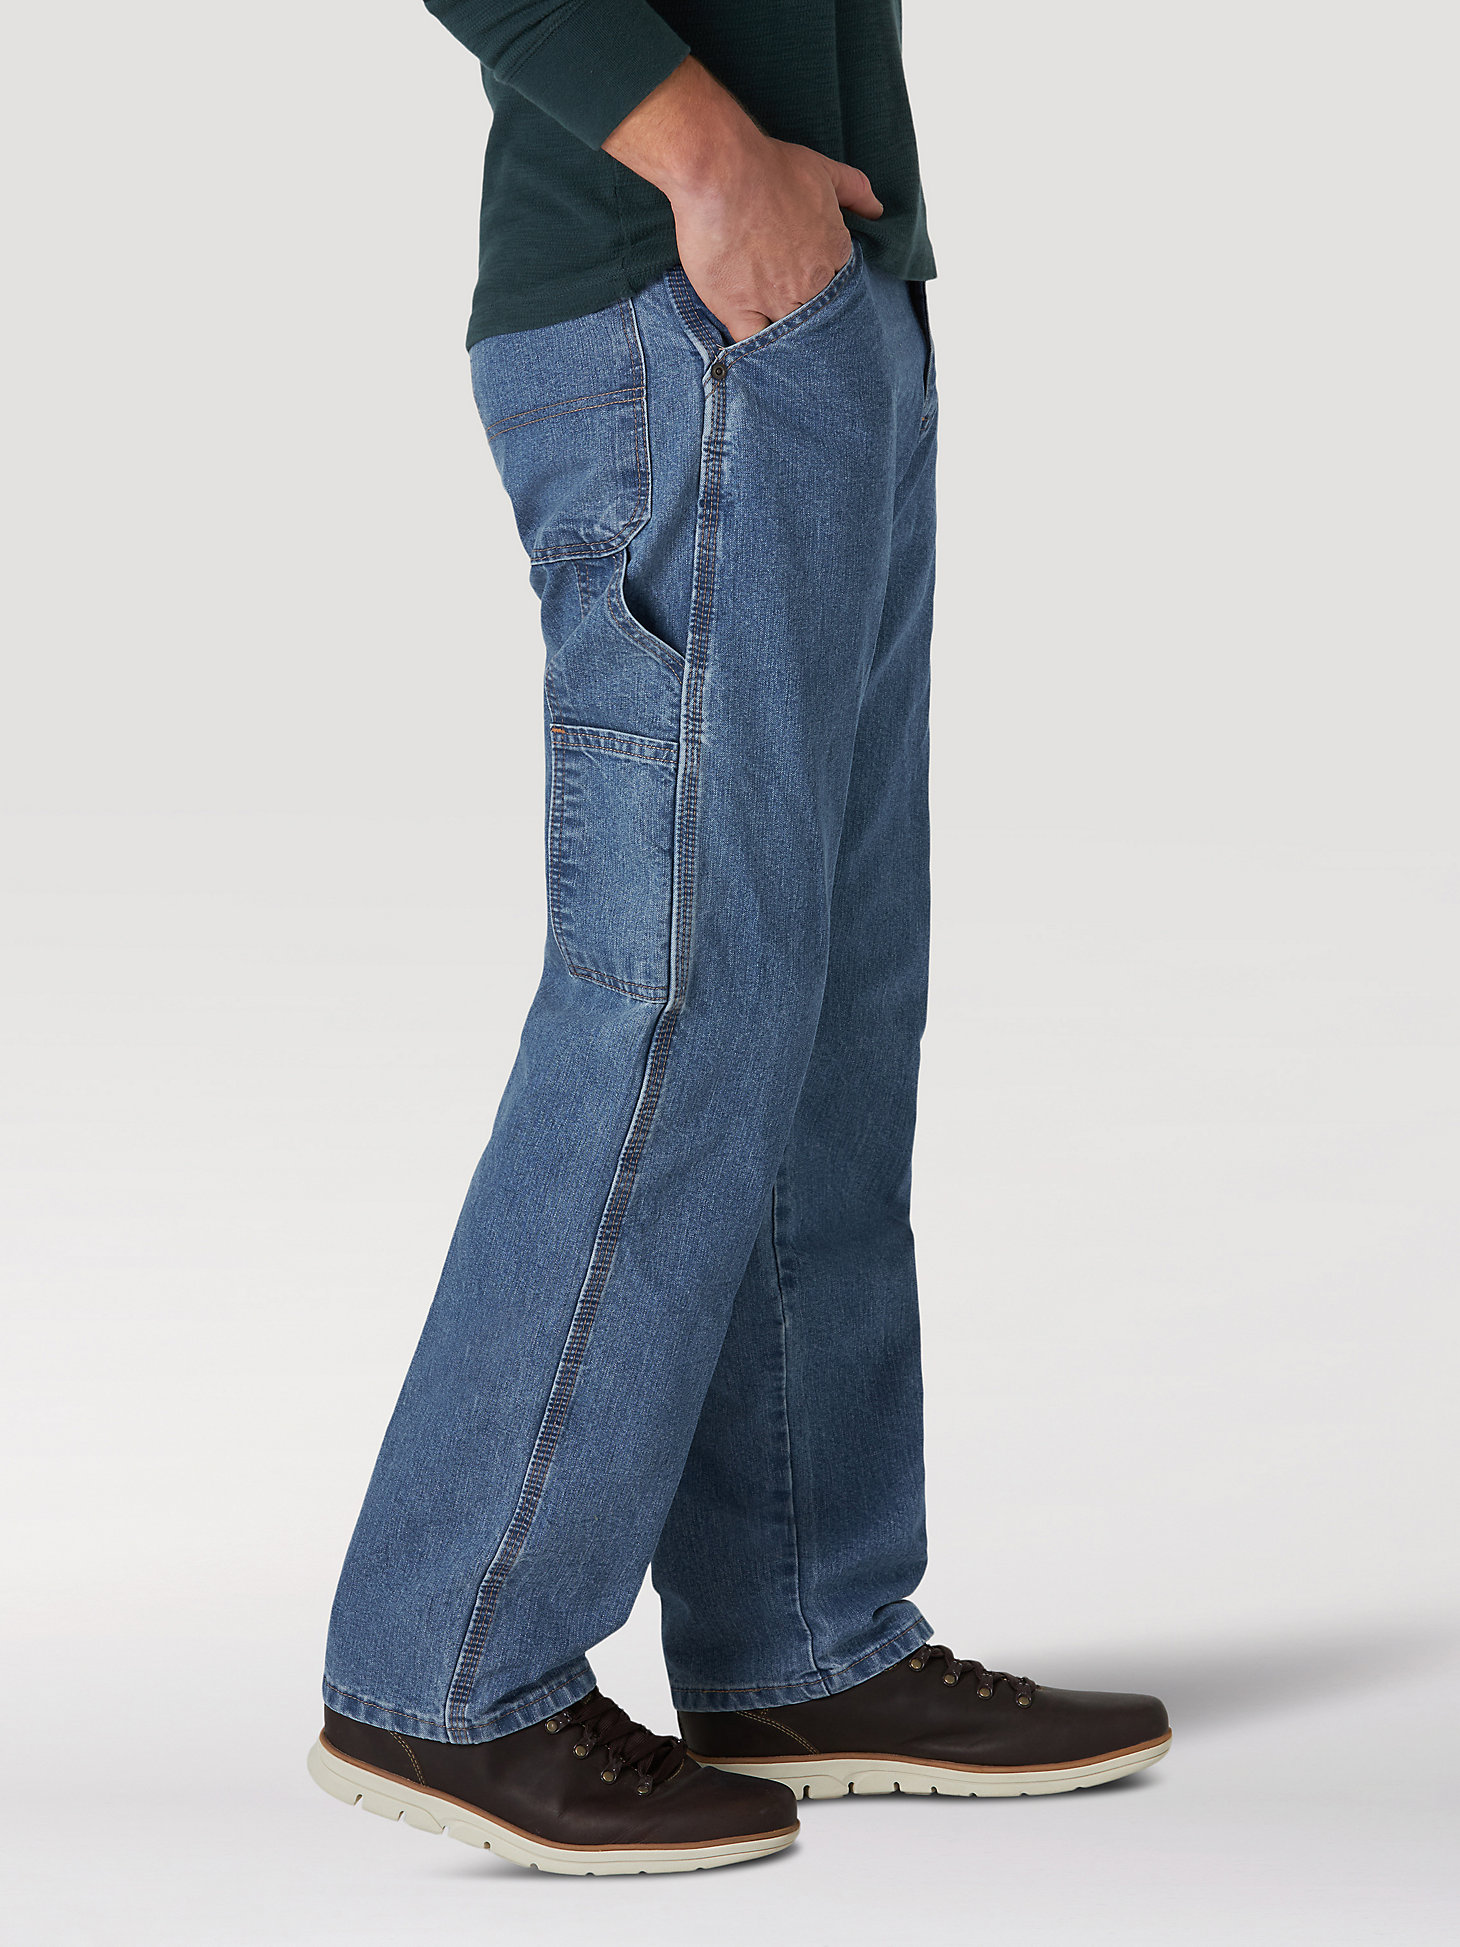 Wrangler® Men's Five Star Premium Carpenter Jean | Men's JEANS | Wrangler®